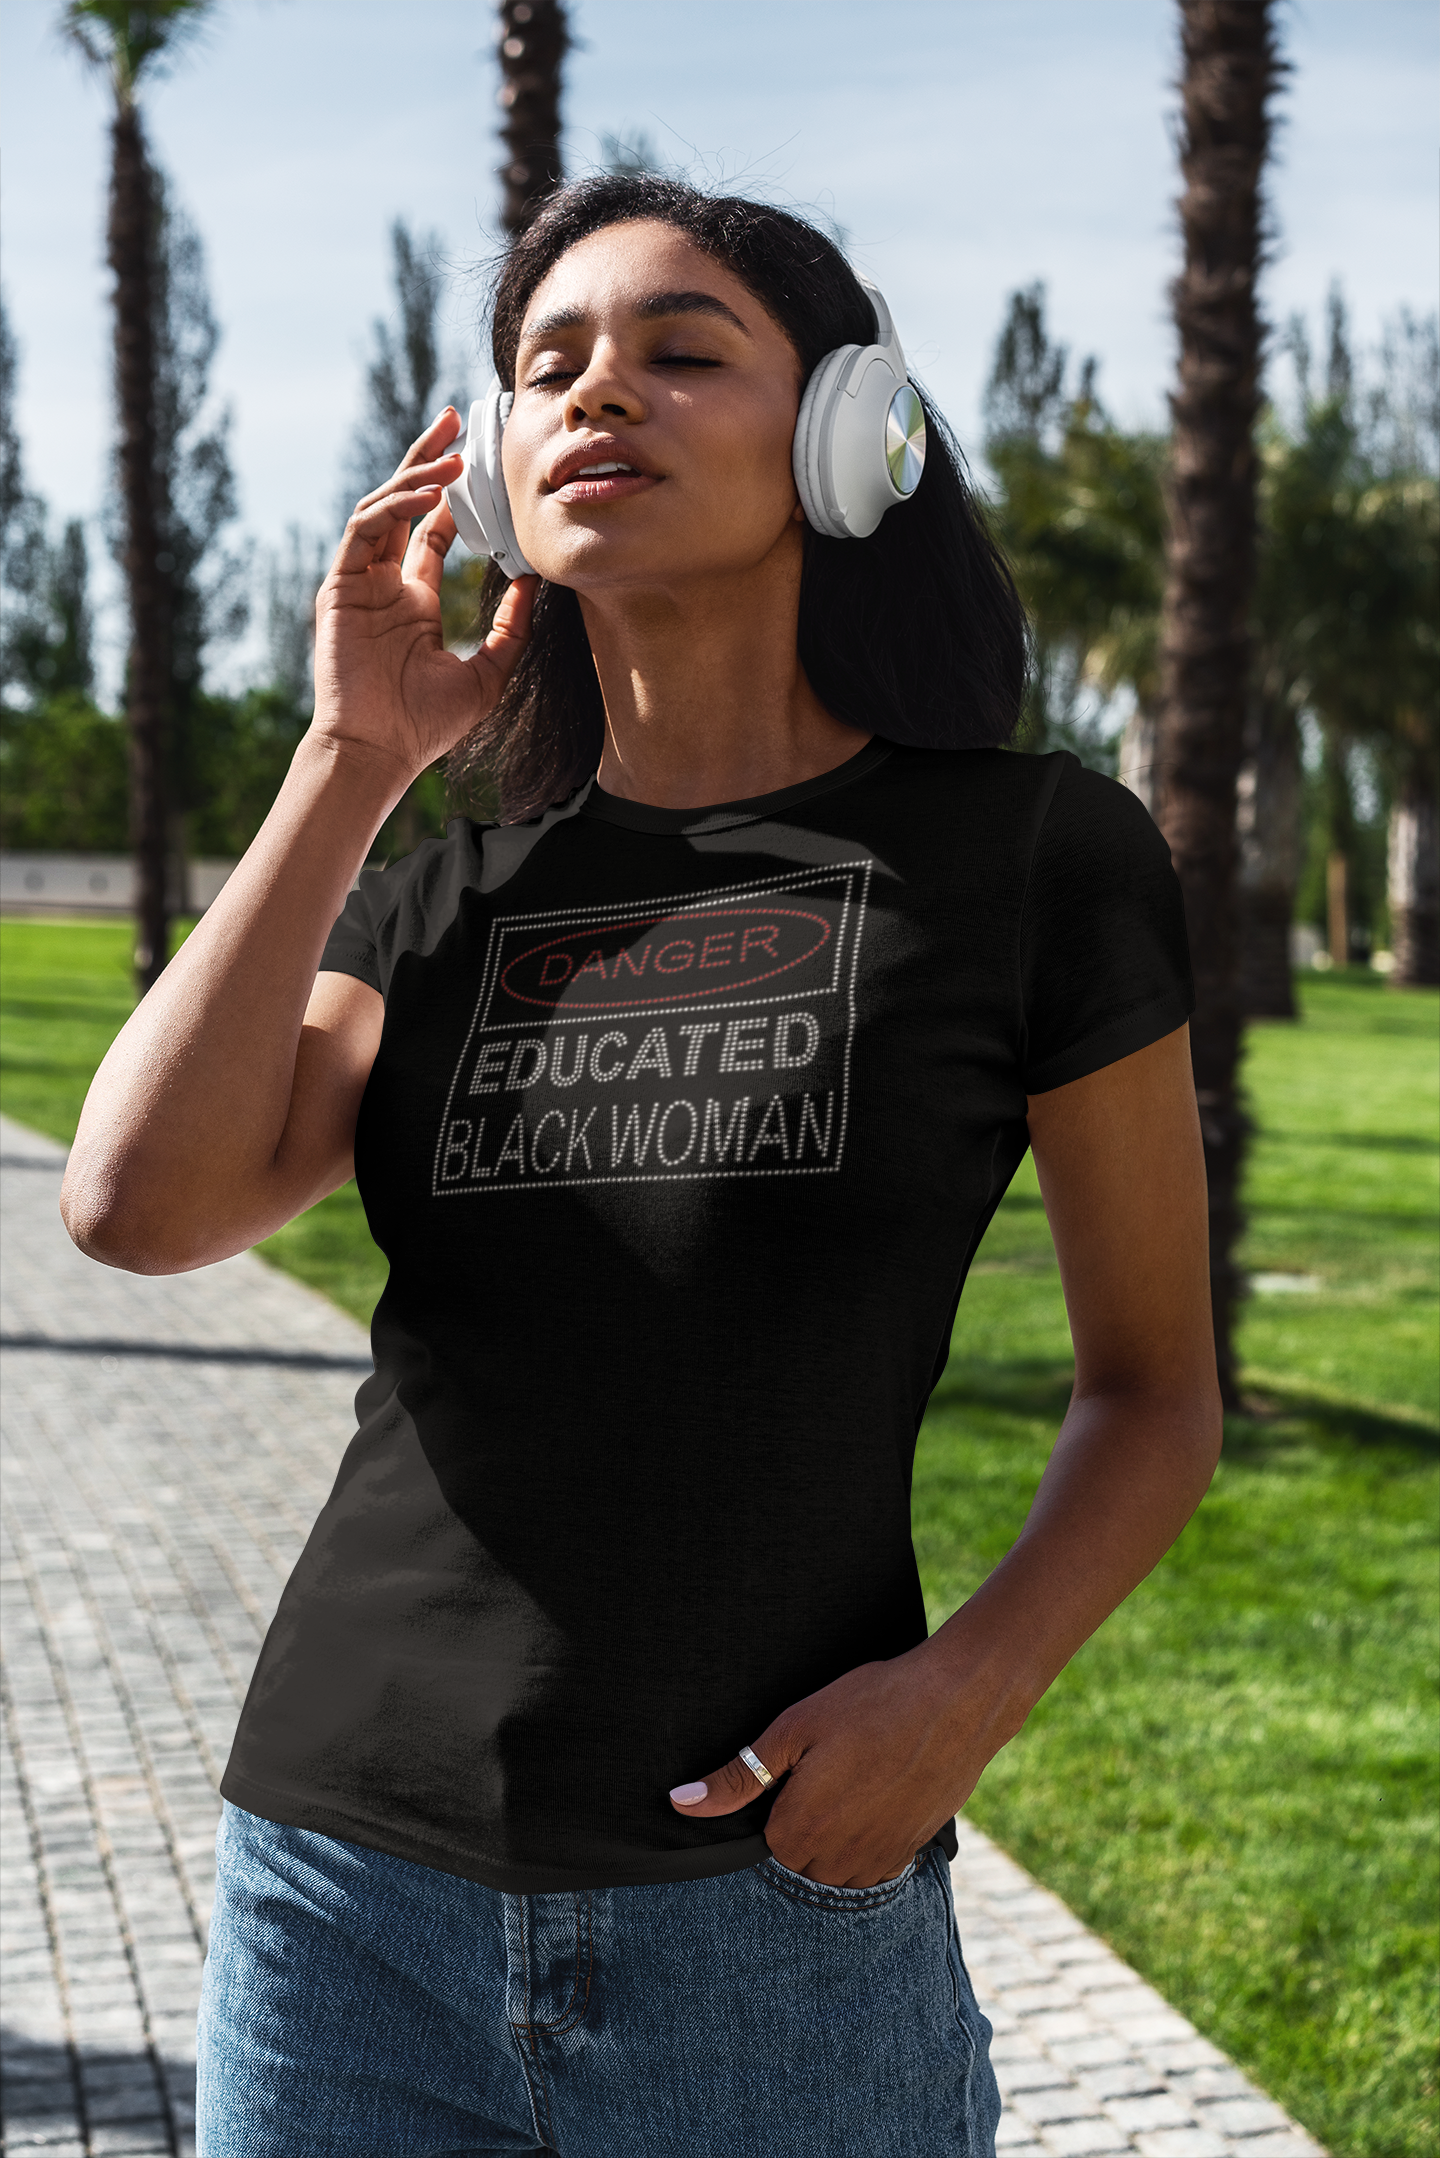 Danger Educated Black Woman Rhinestone T-shirt